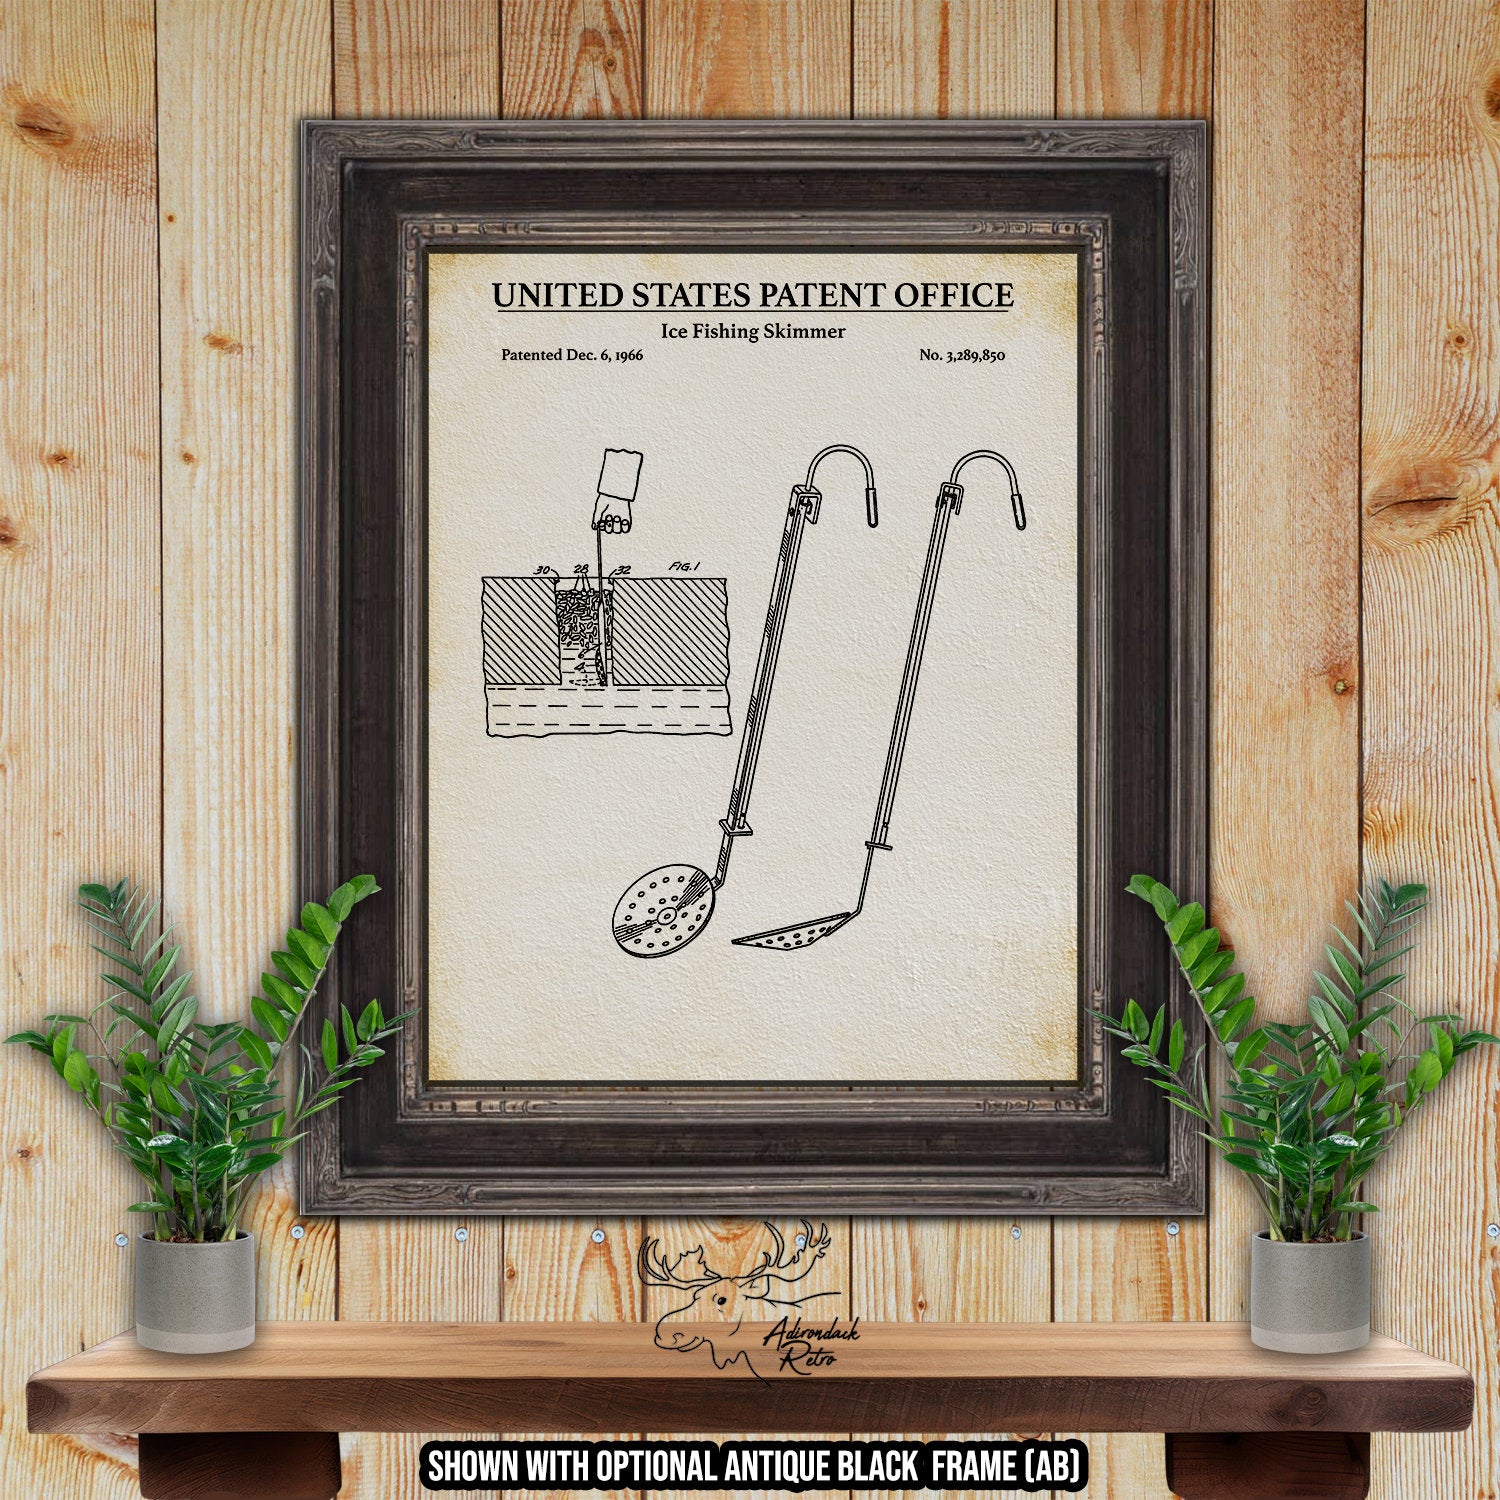 Ice Fishing Skimmer Patent Print - 1928 Ice Fishing Tackle Invention at Adirondack Retro